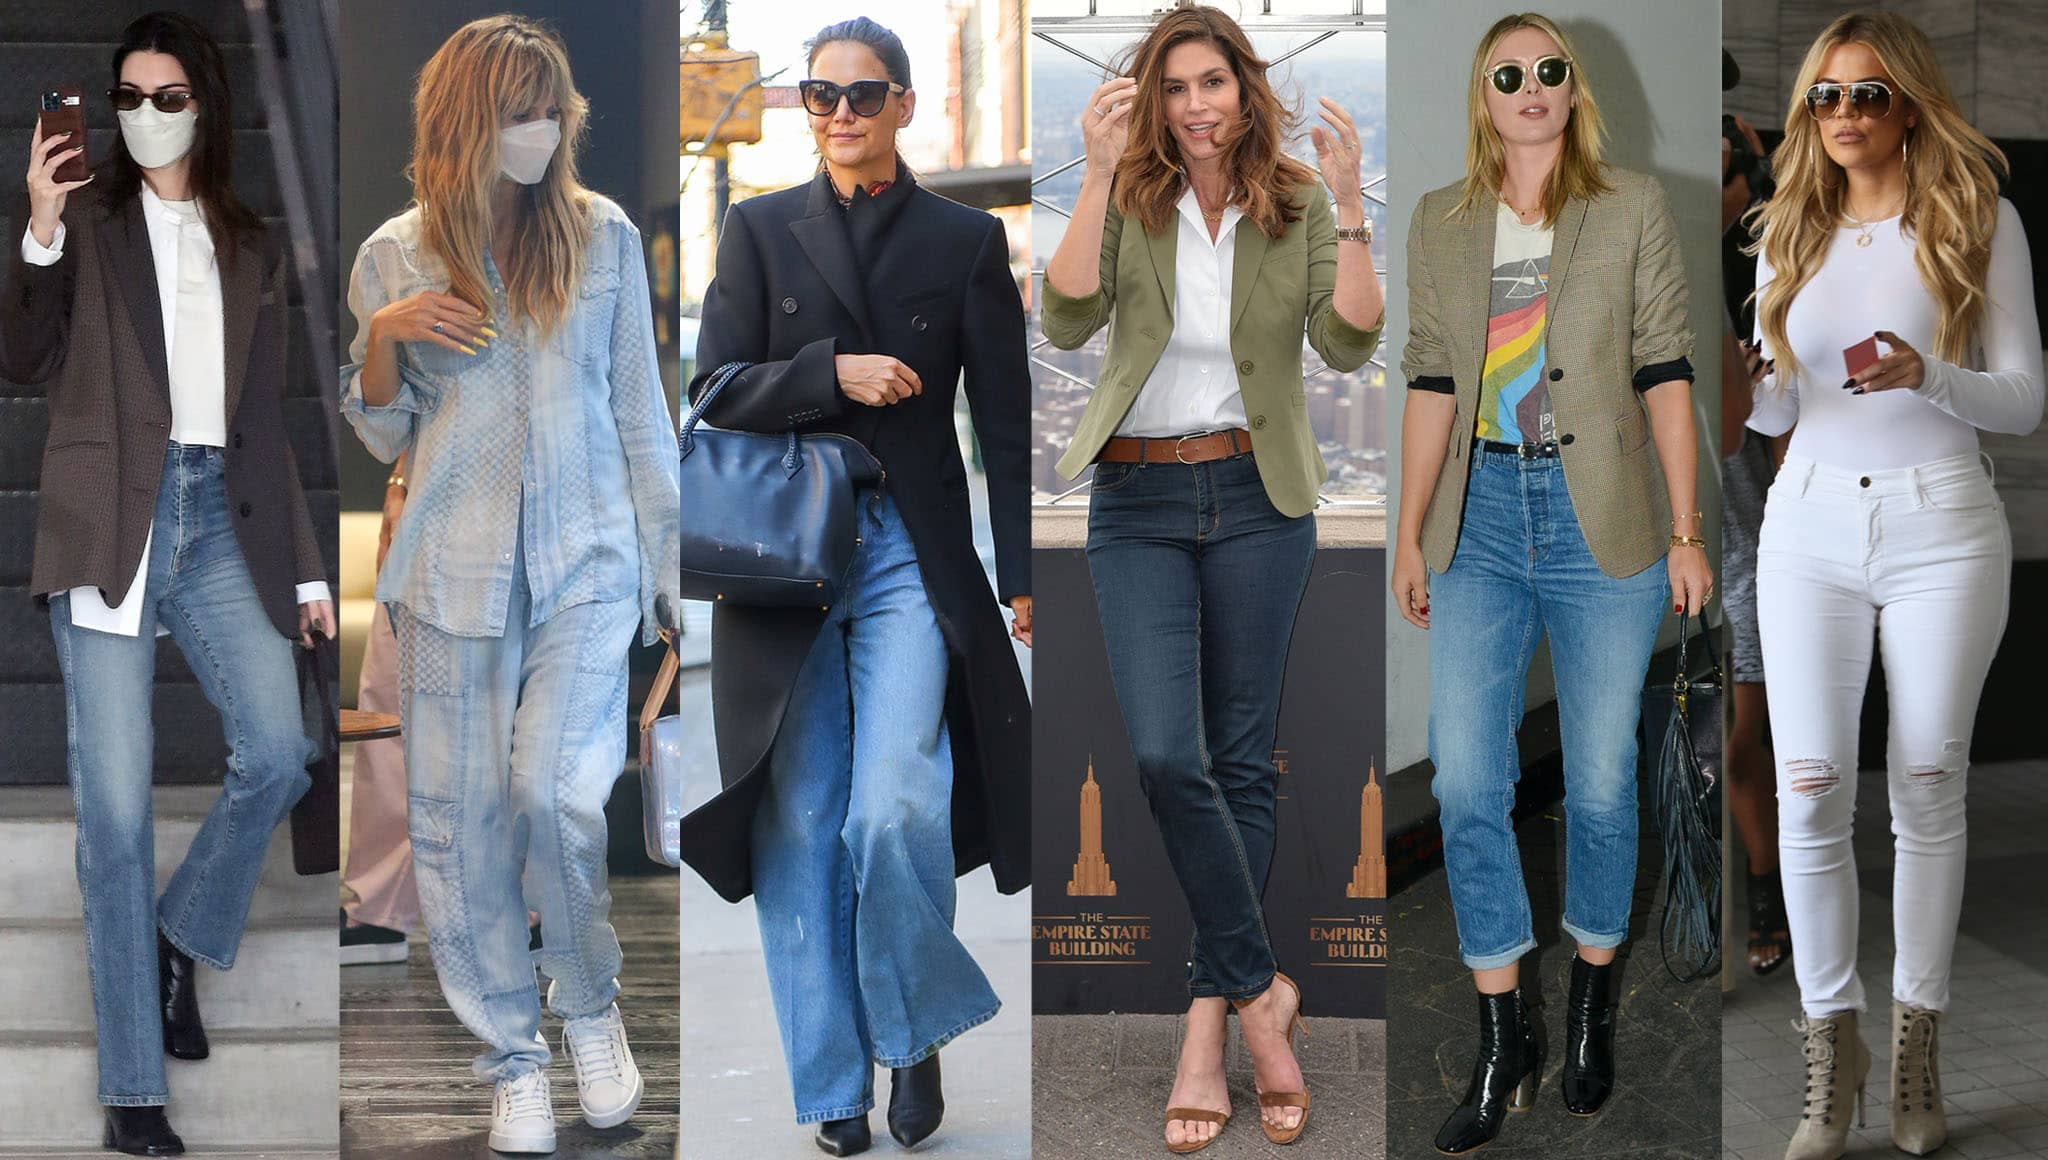 Tall celebrities Kendall Jenner, Heidi Klum, Katie Holmes, Cindy Crawford, Maria Sharapova, and Khloe Kardashian show how they wear jeans